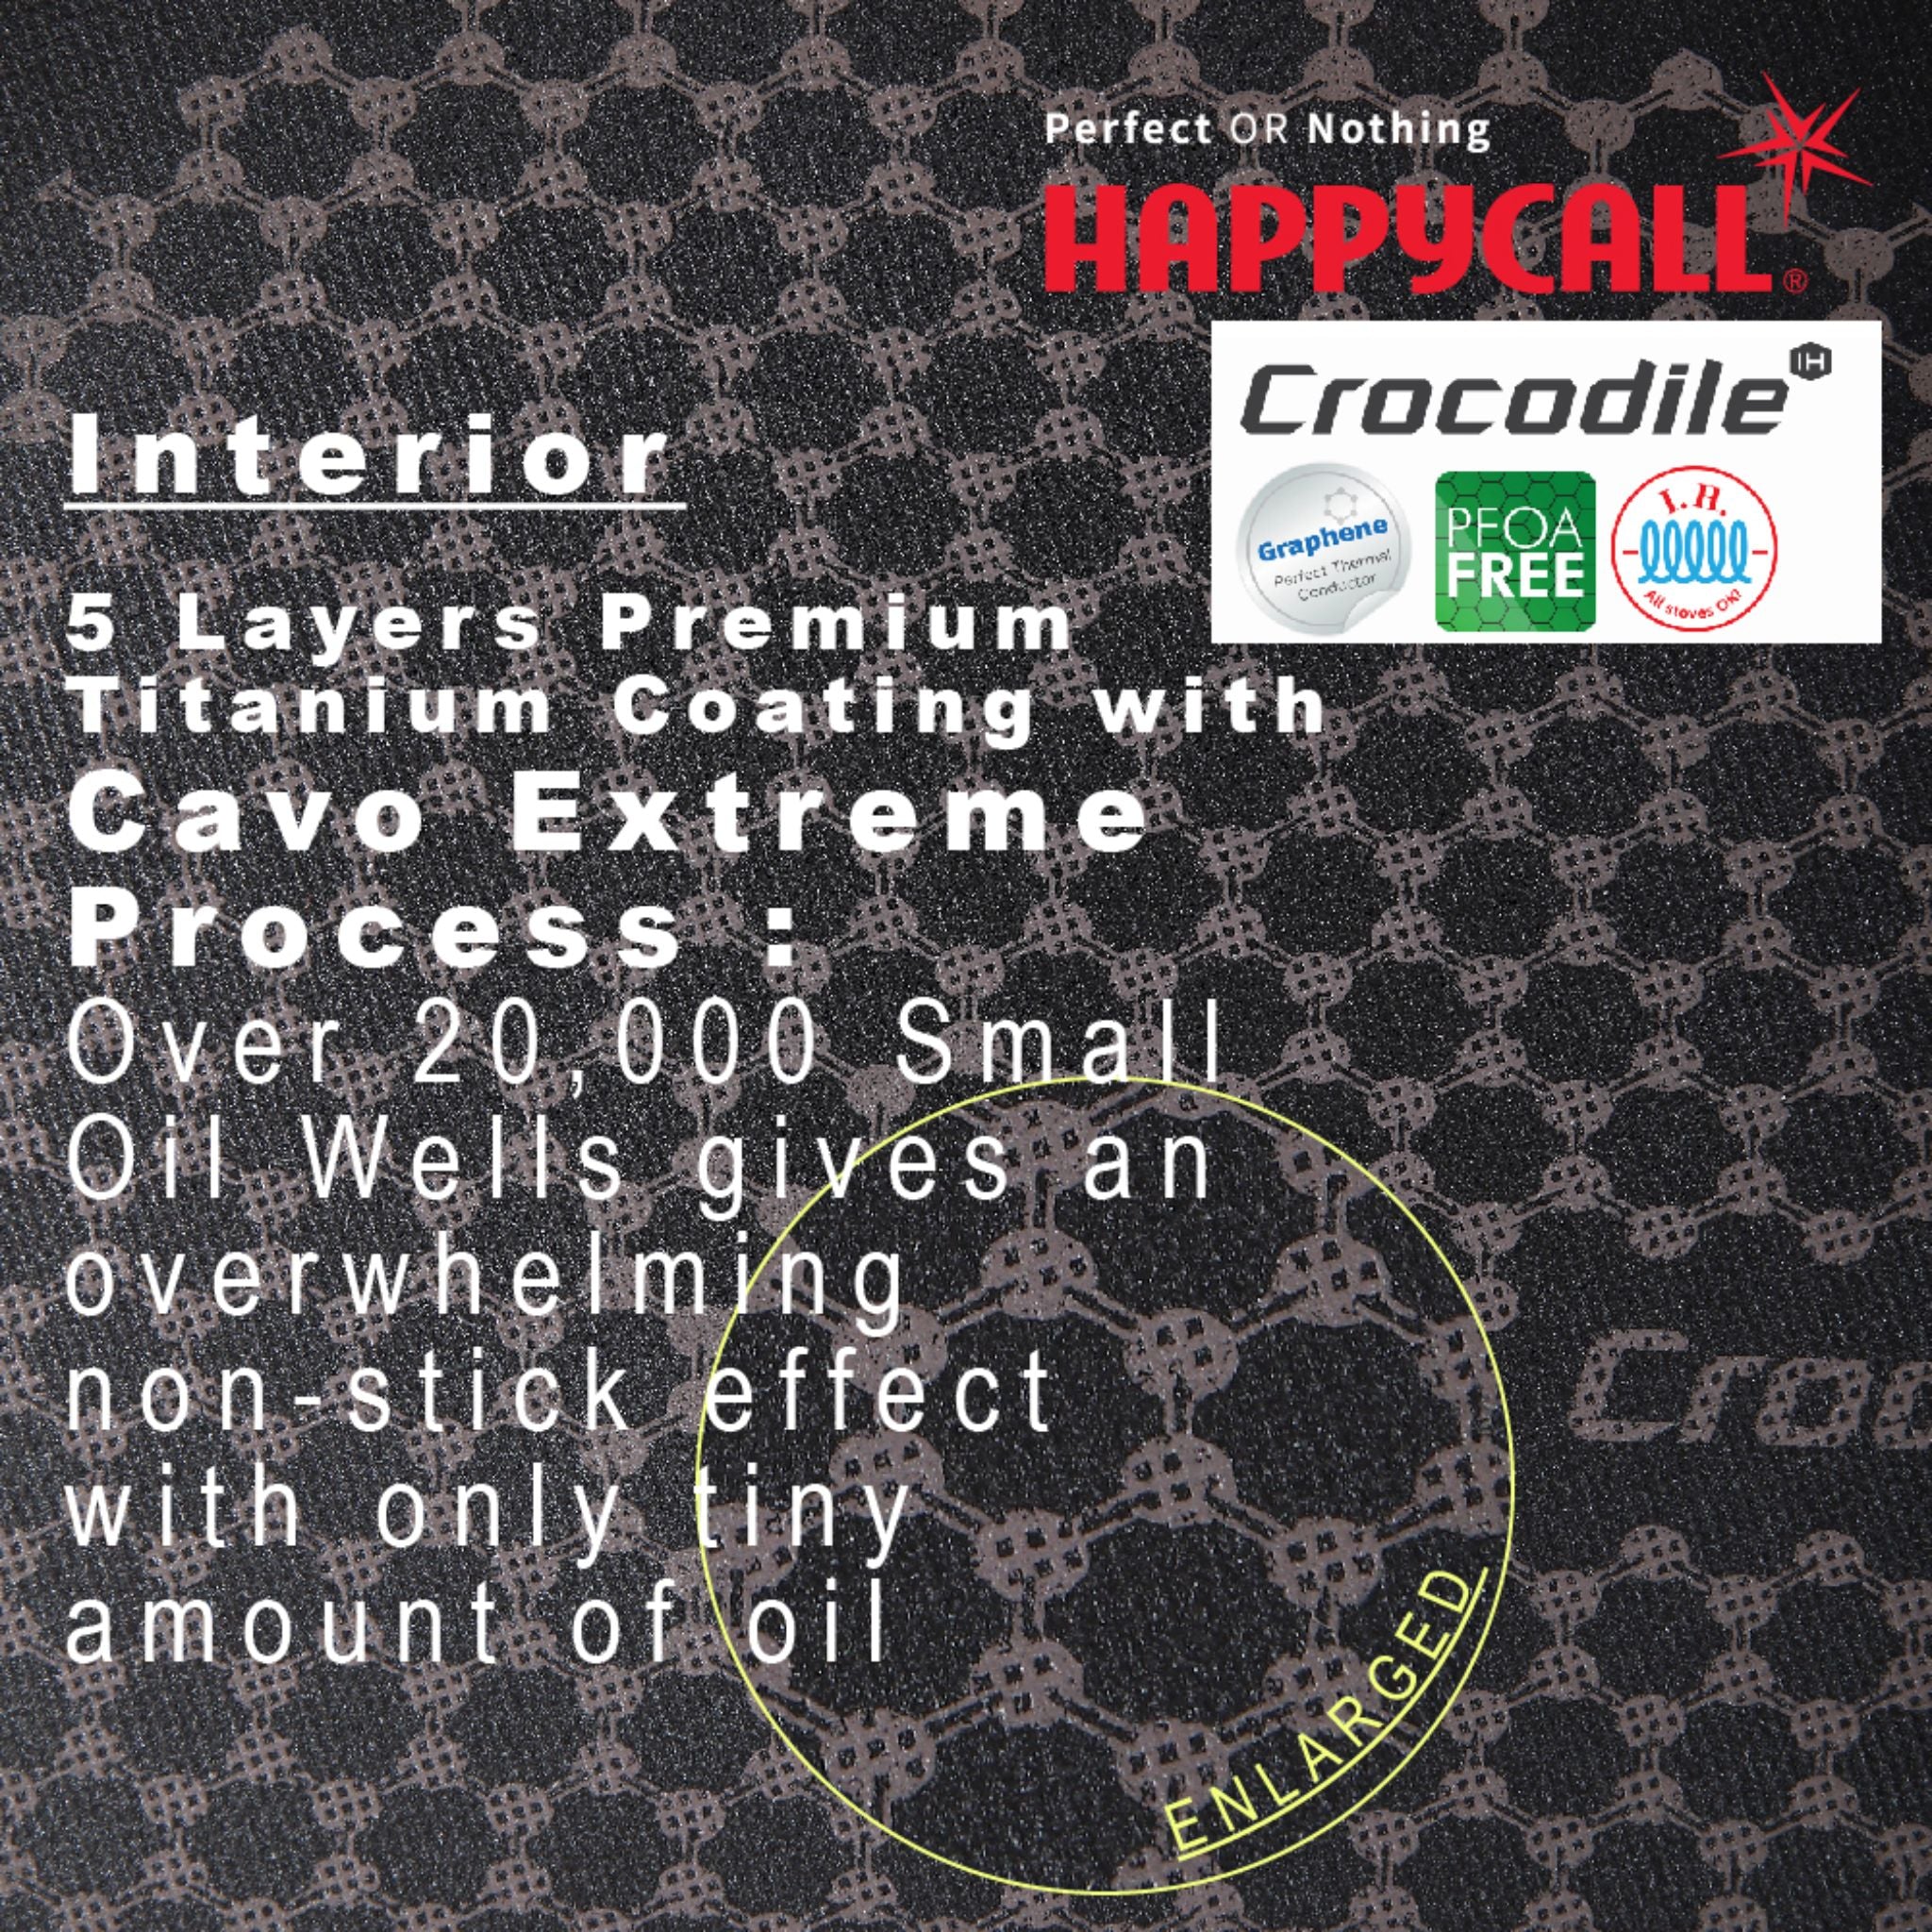 HAPPYCALL Crocodile 24cm Graphene Wok Pan (Induction Compatible) -  (HEA-3001-0640)